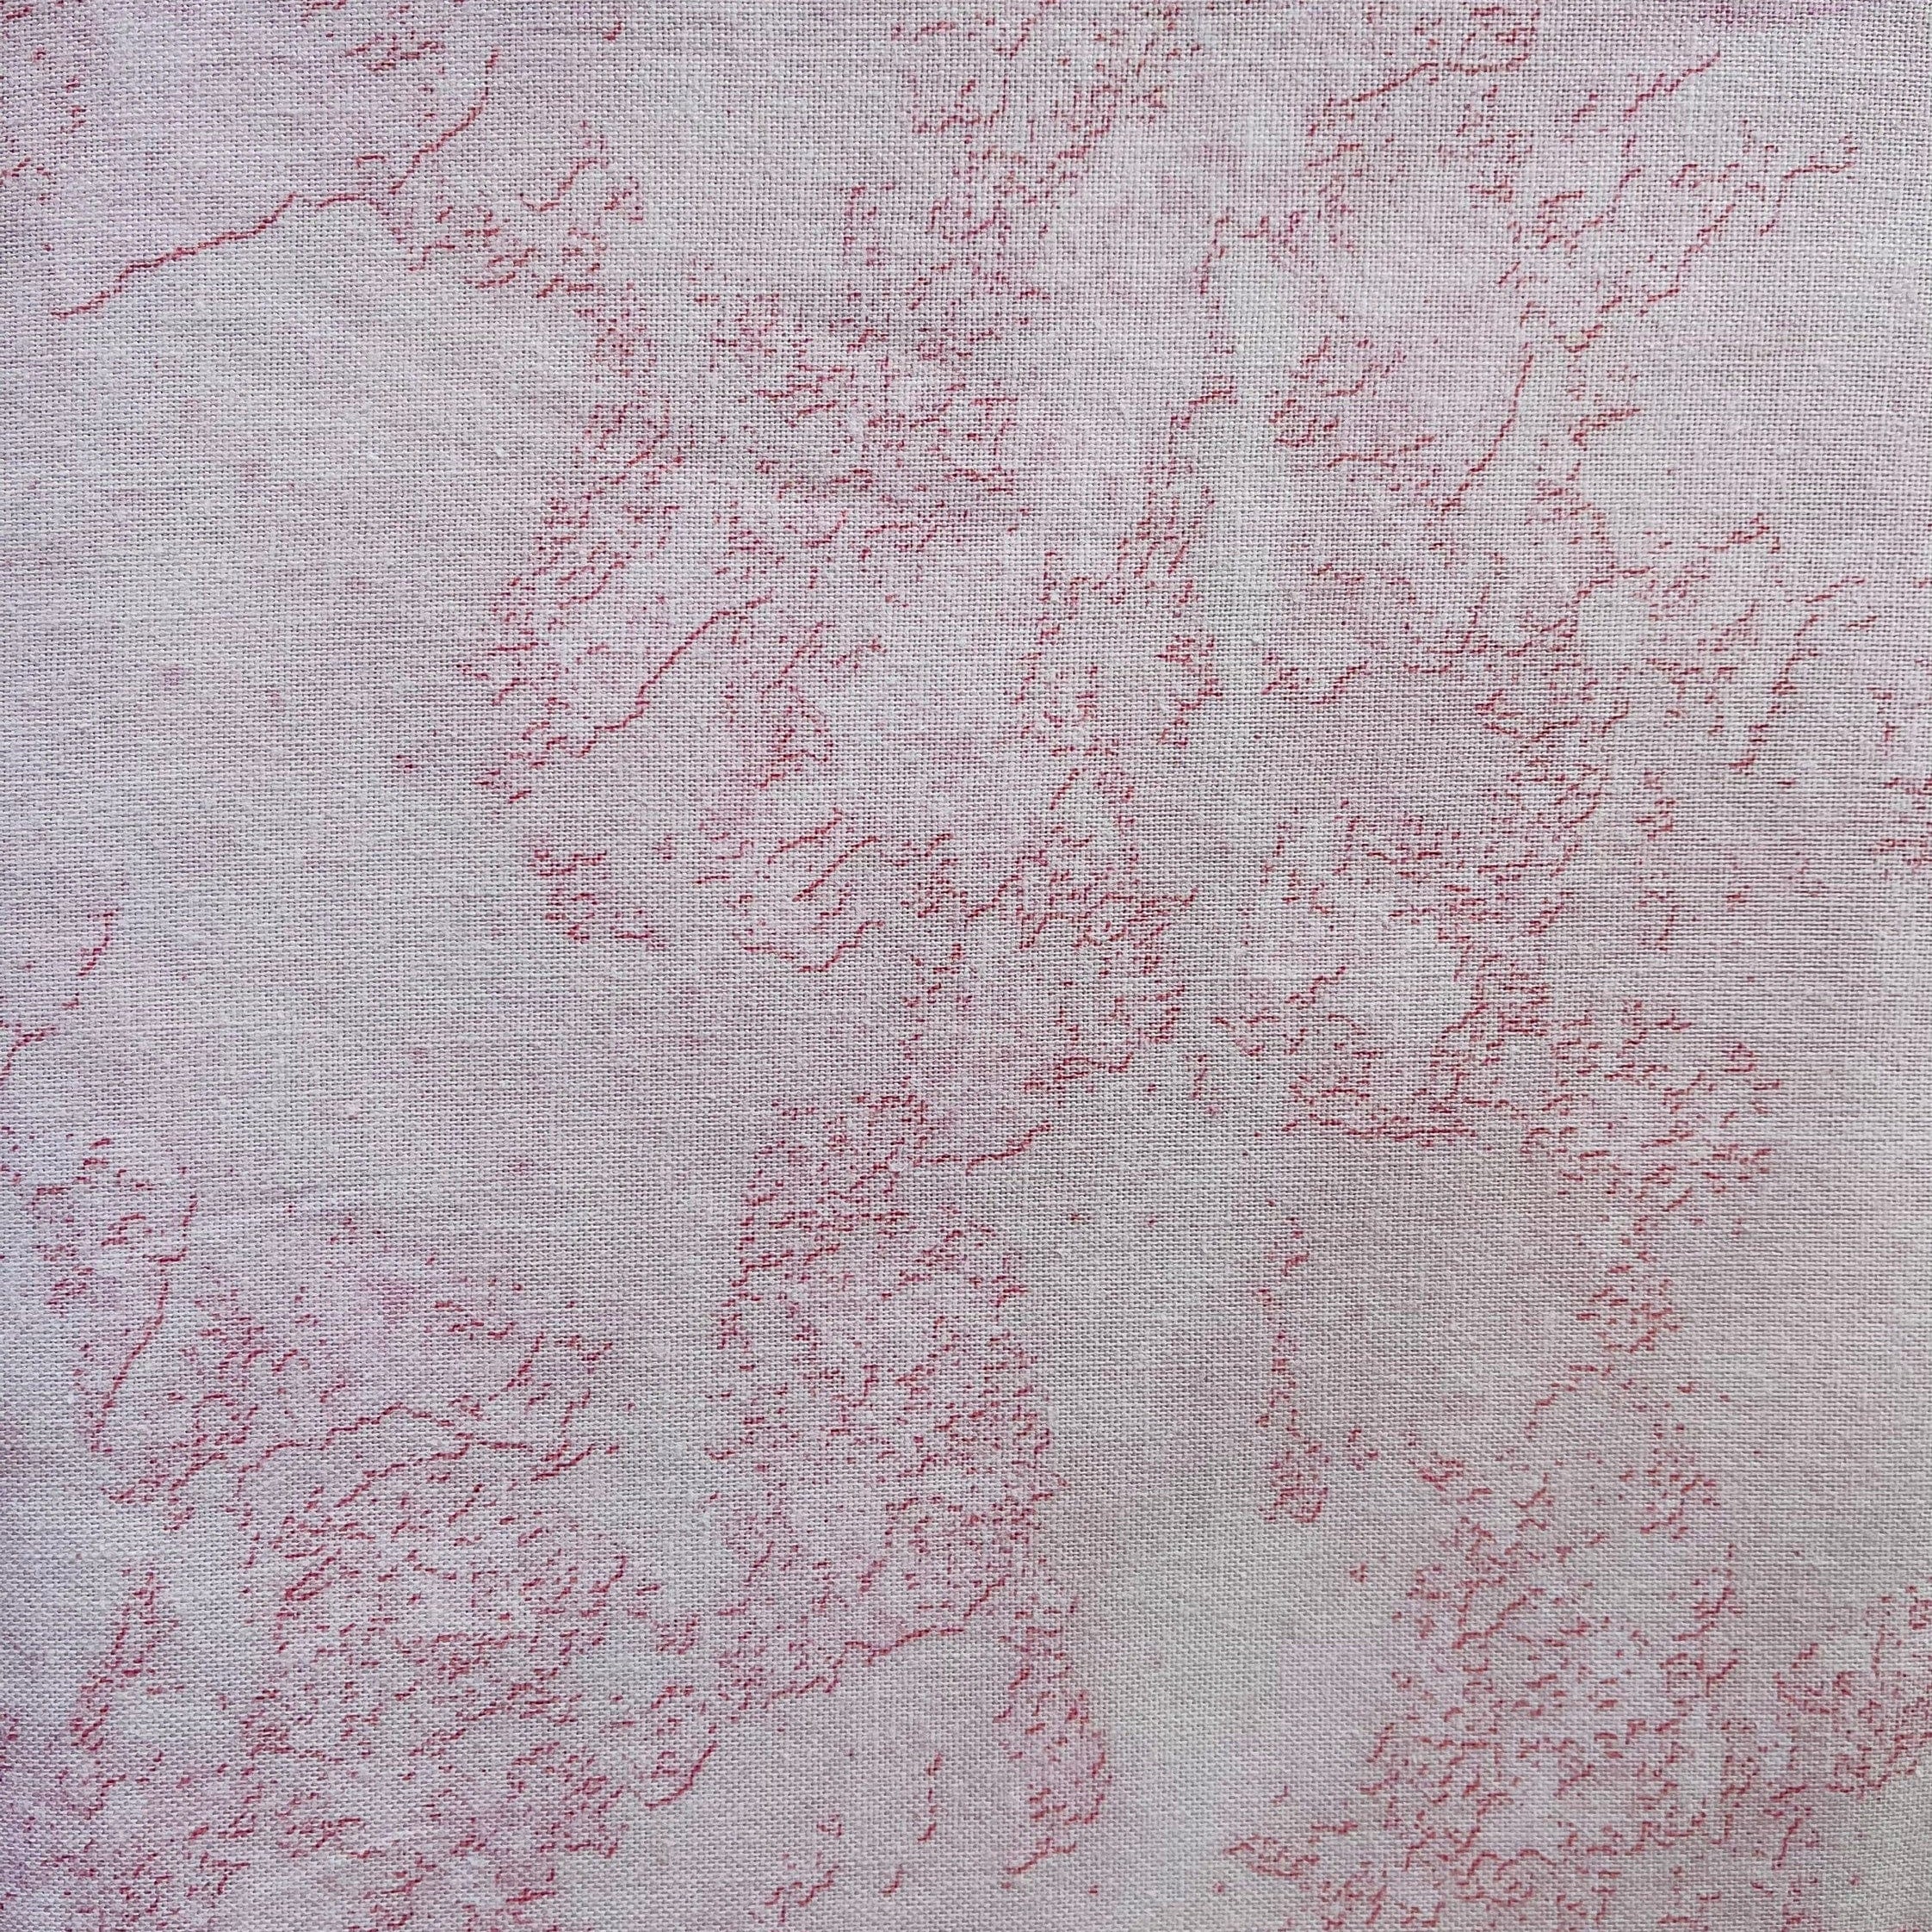 Impressions - Texture - Blush Fabric - Cotton + Steel - Quilting Cotton Fabric - Pink - Blush - JB404-BL6